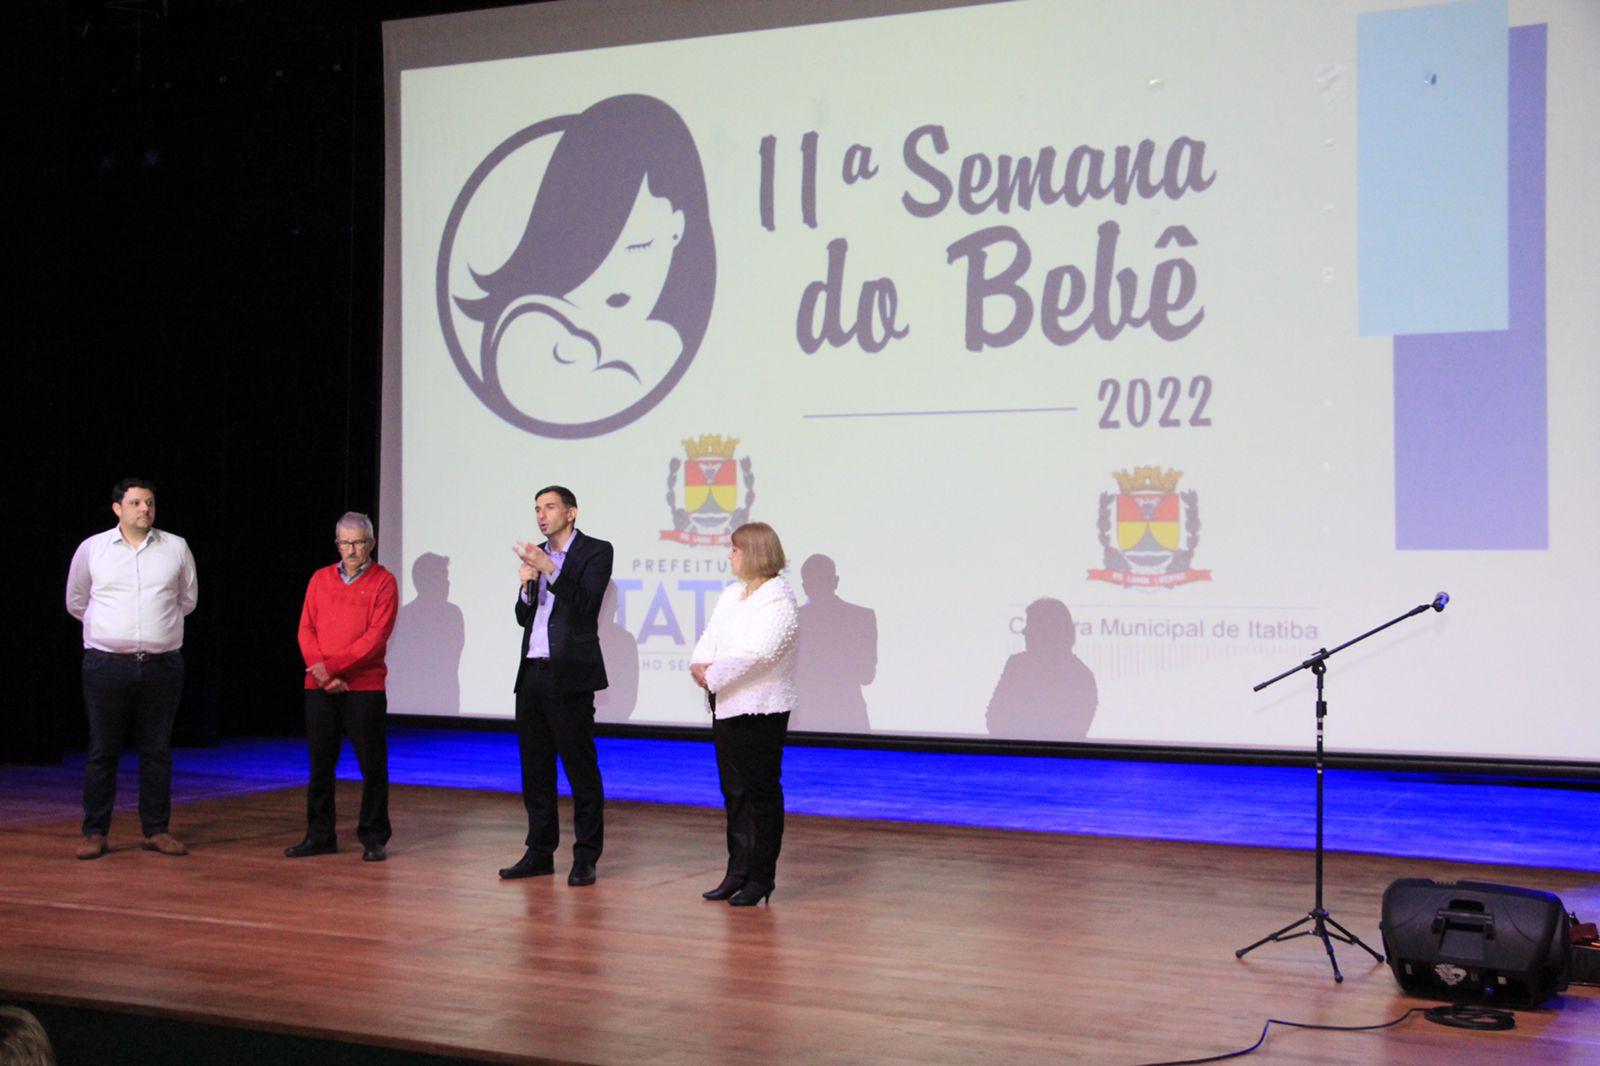 Prefeitura de Itatiba realiza abertura da Semana do Bebê